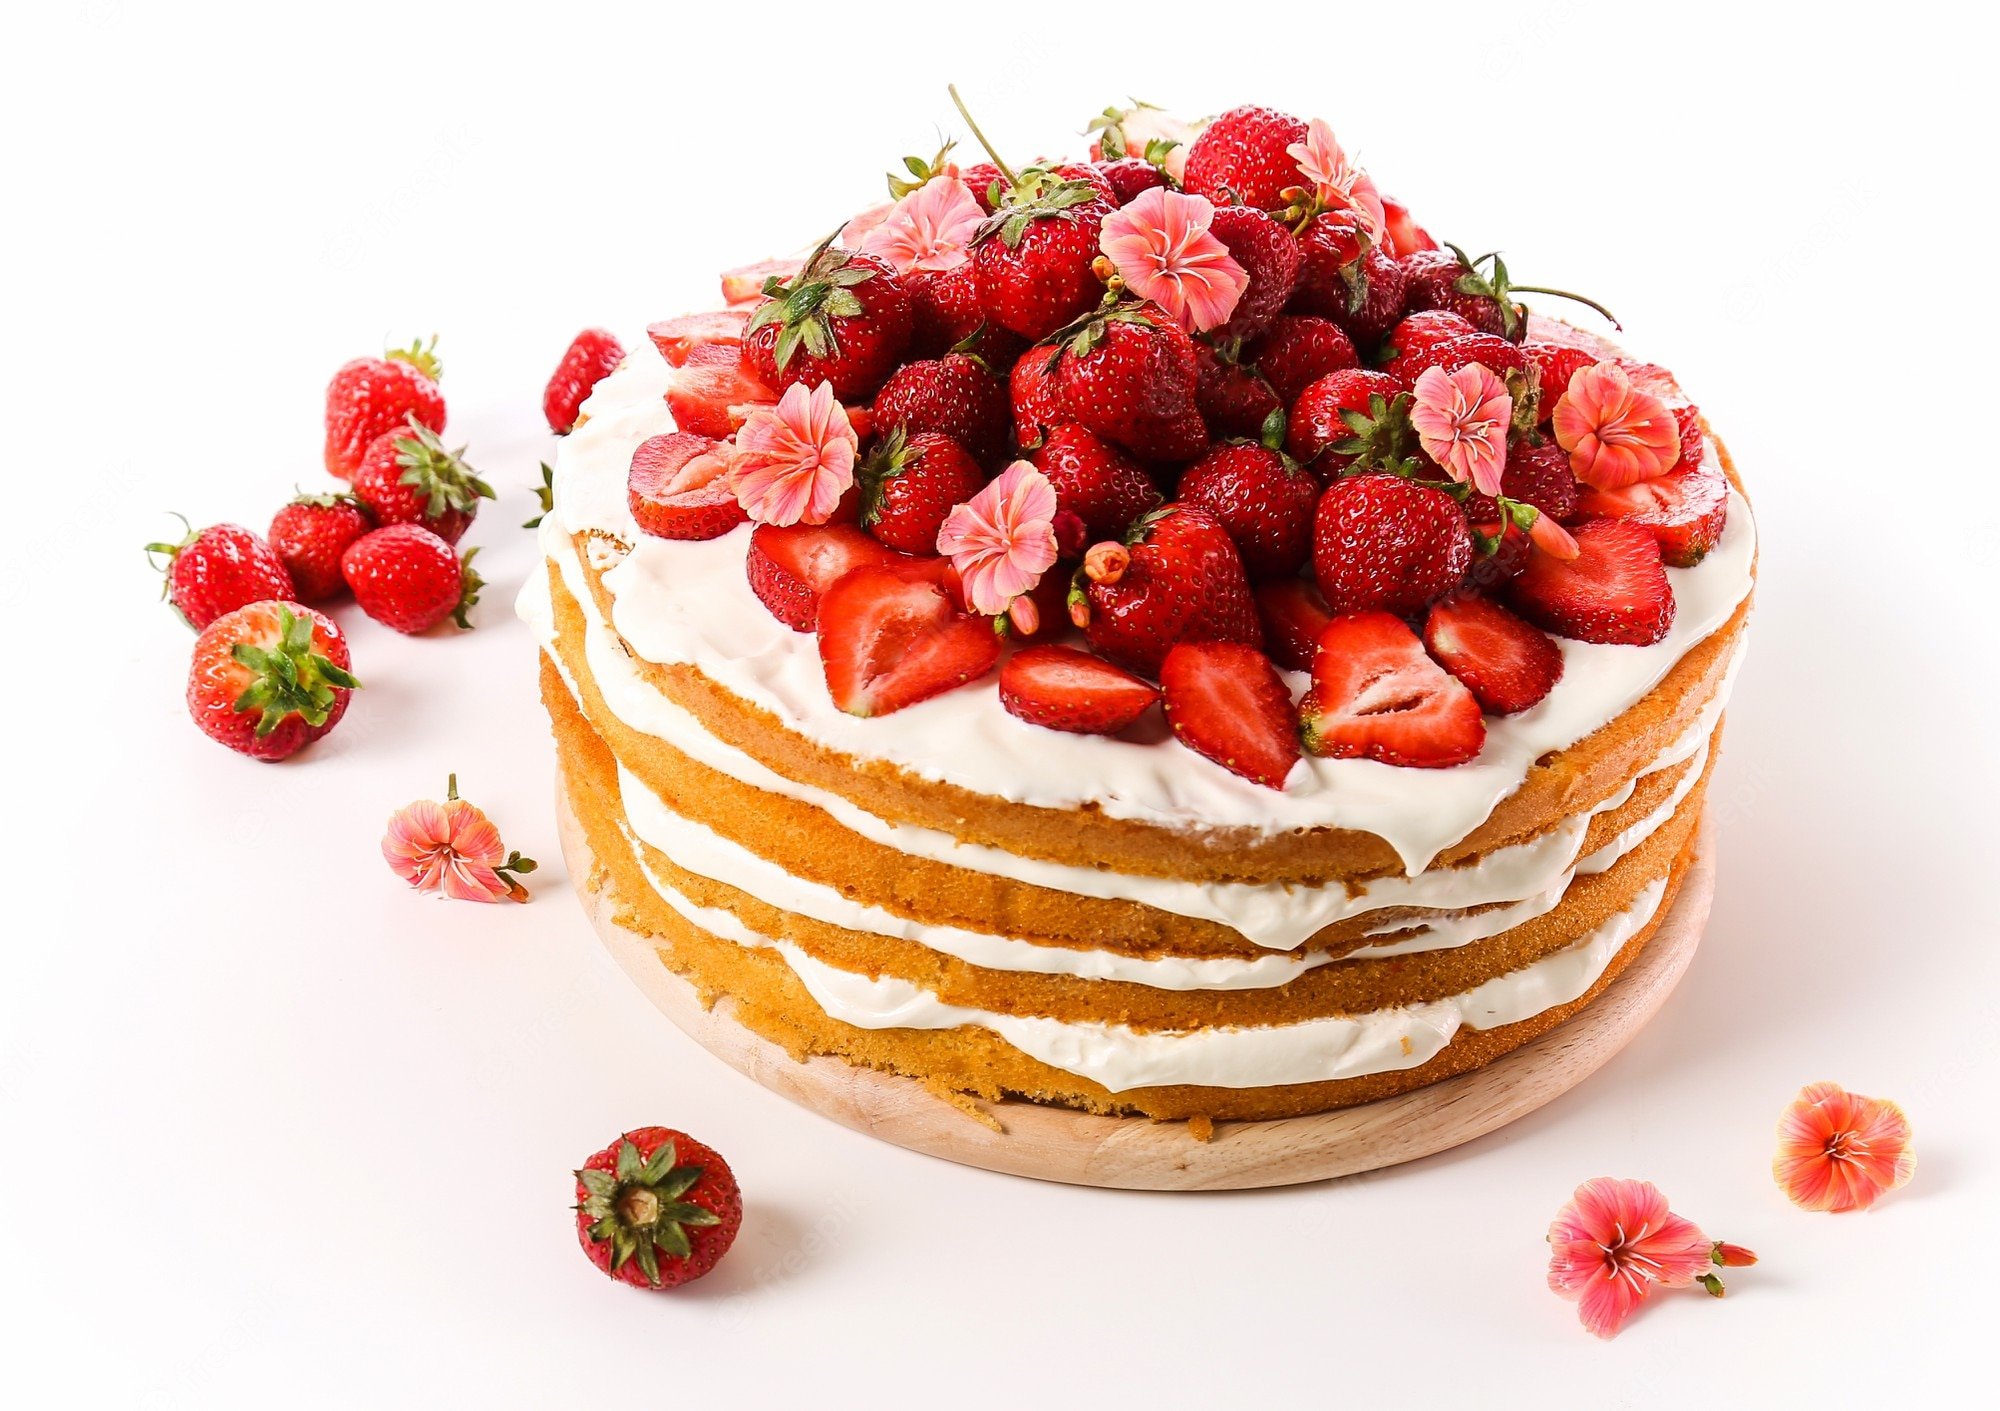 Fruit cake Image. Free Vectors, & PSD